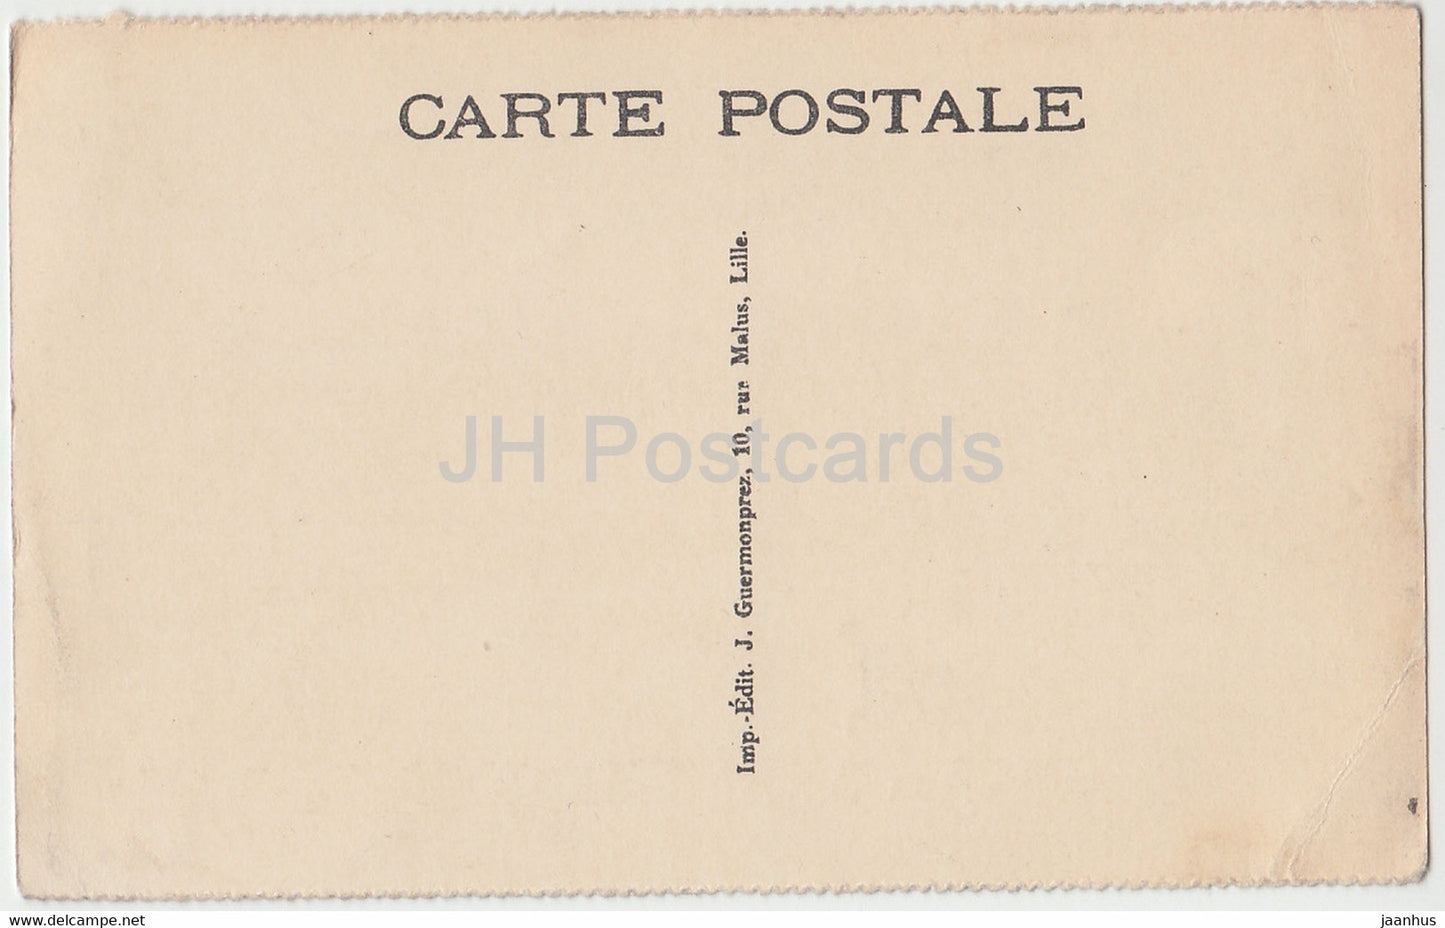 Roubaix - La Grand Place et l'Avenue de la Gare - Straßenbahn - alte Postkarte - Frankreich - unbenutzt